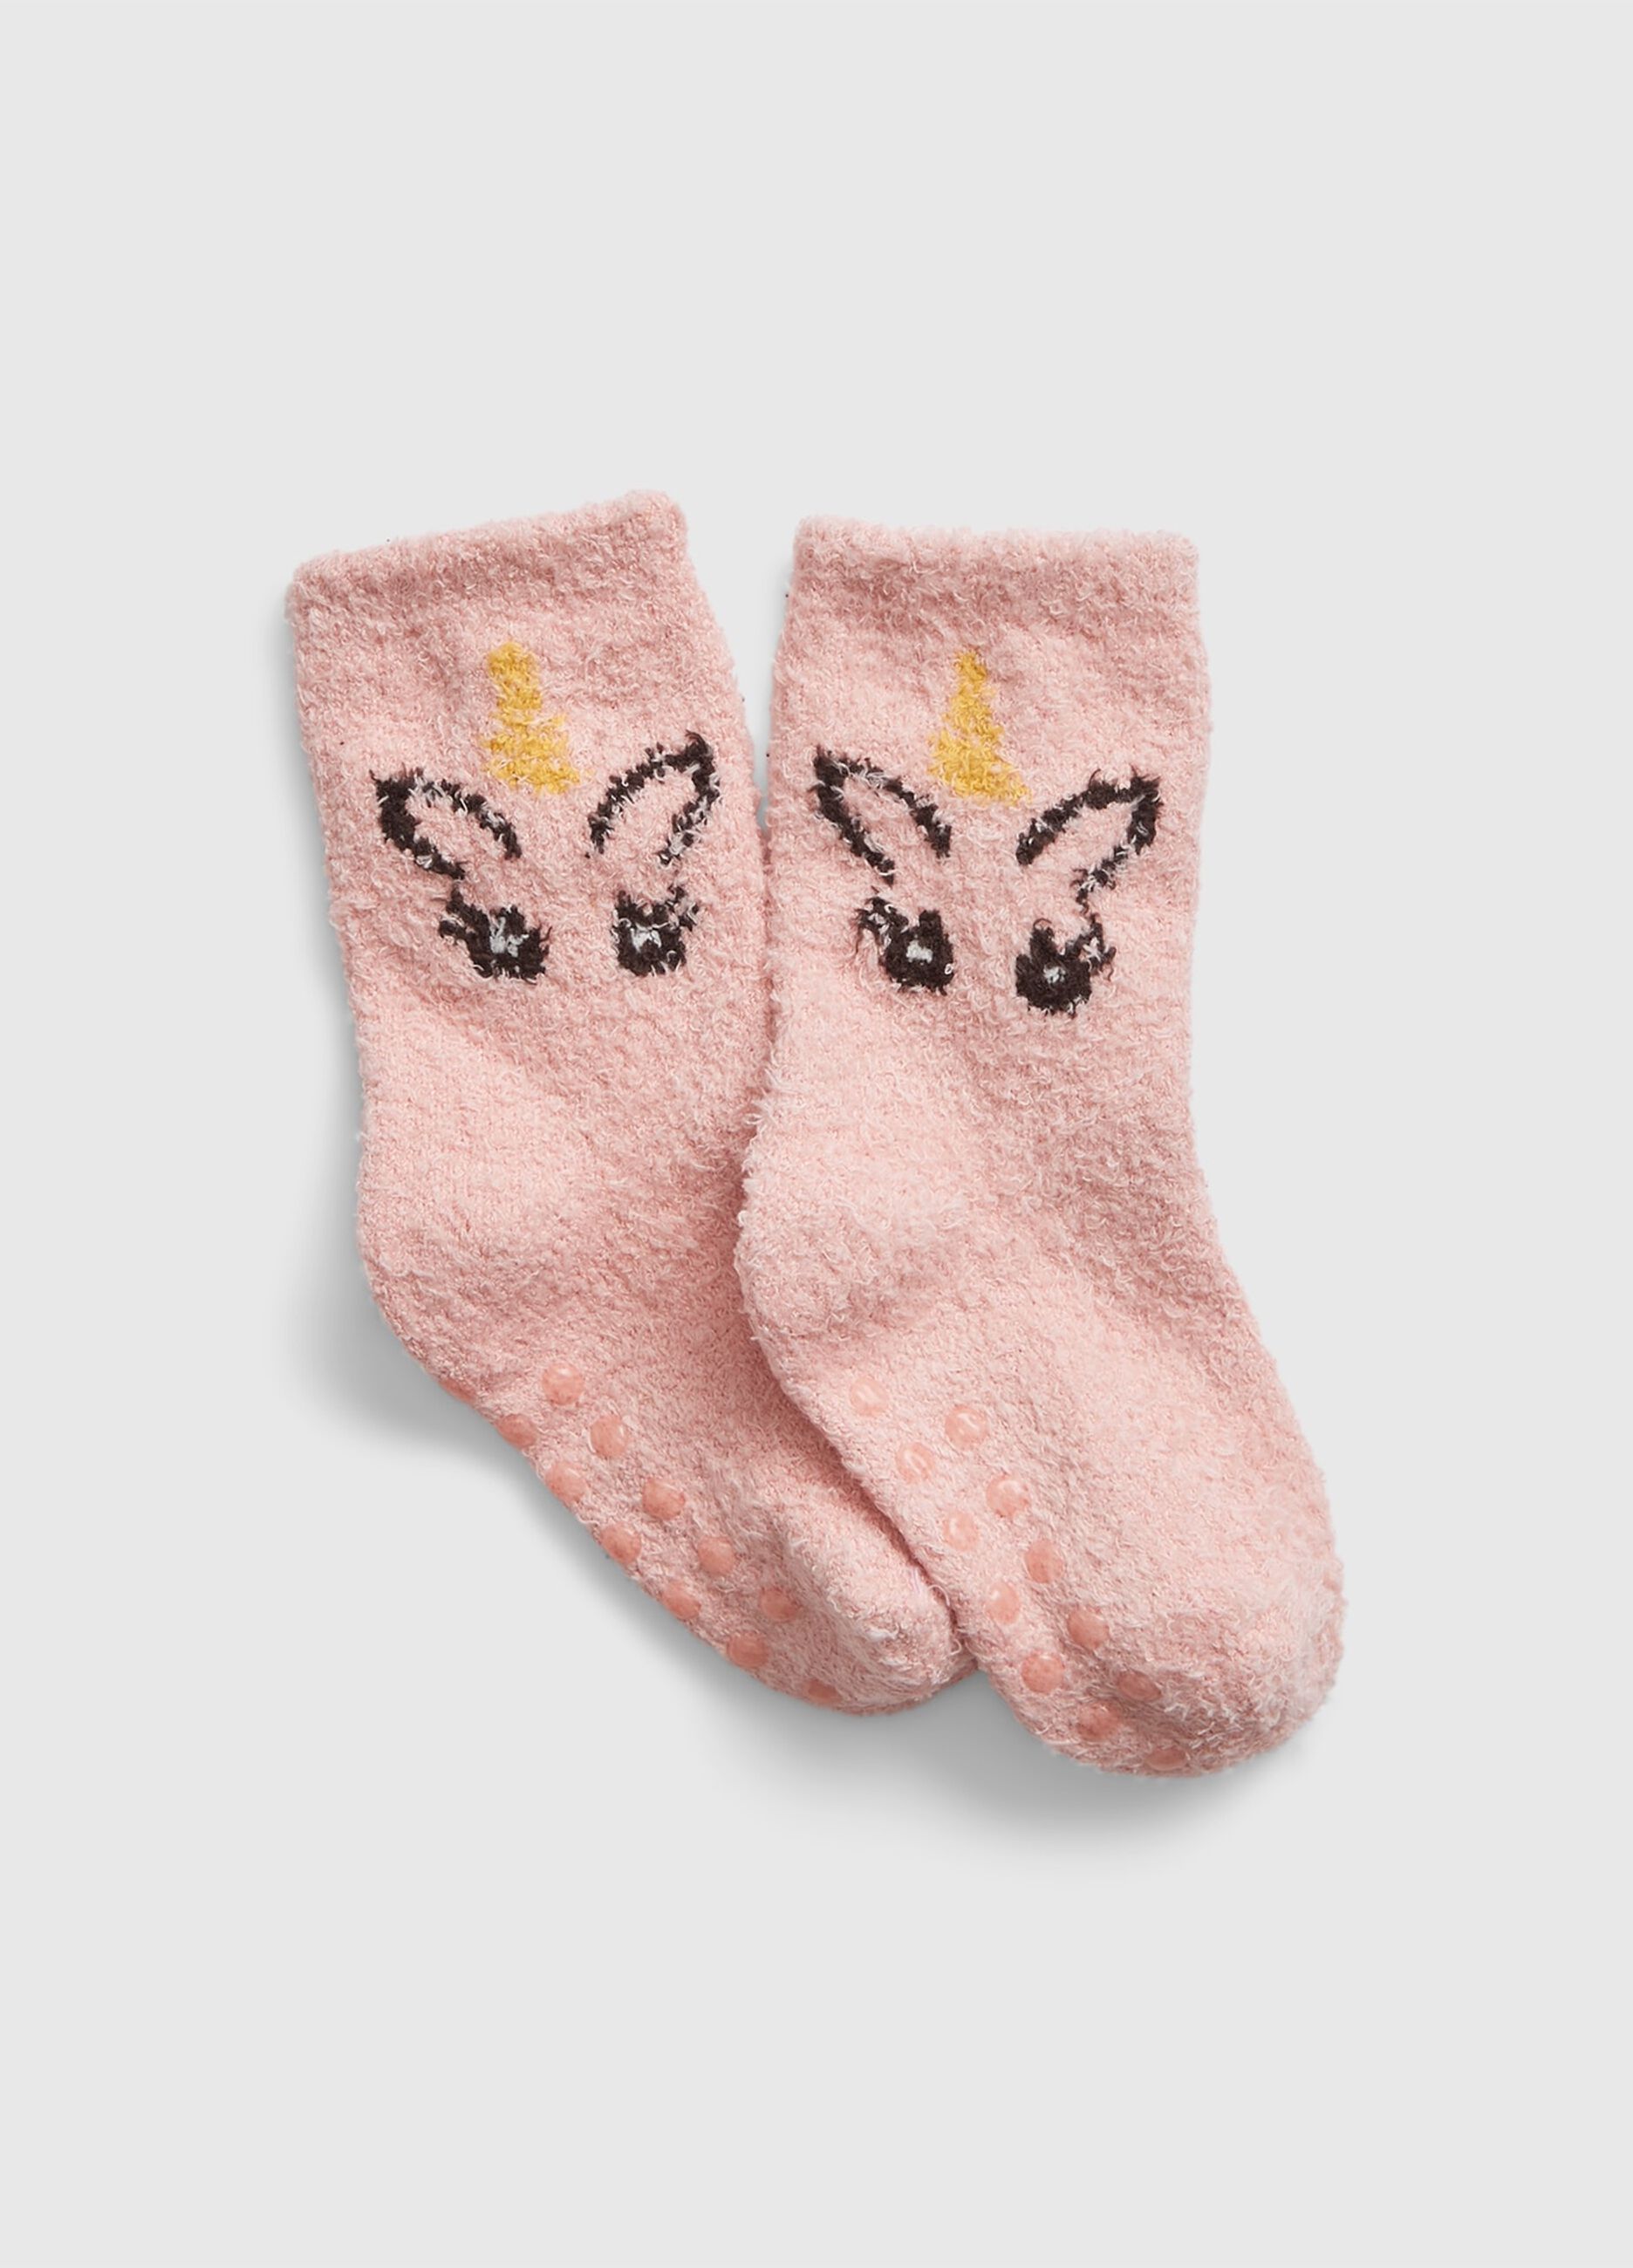 Slipper socks with unicorn design